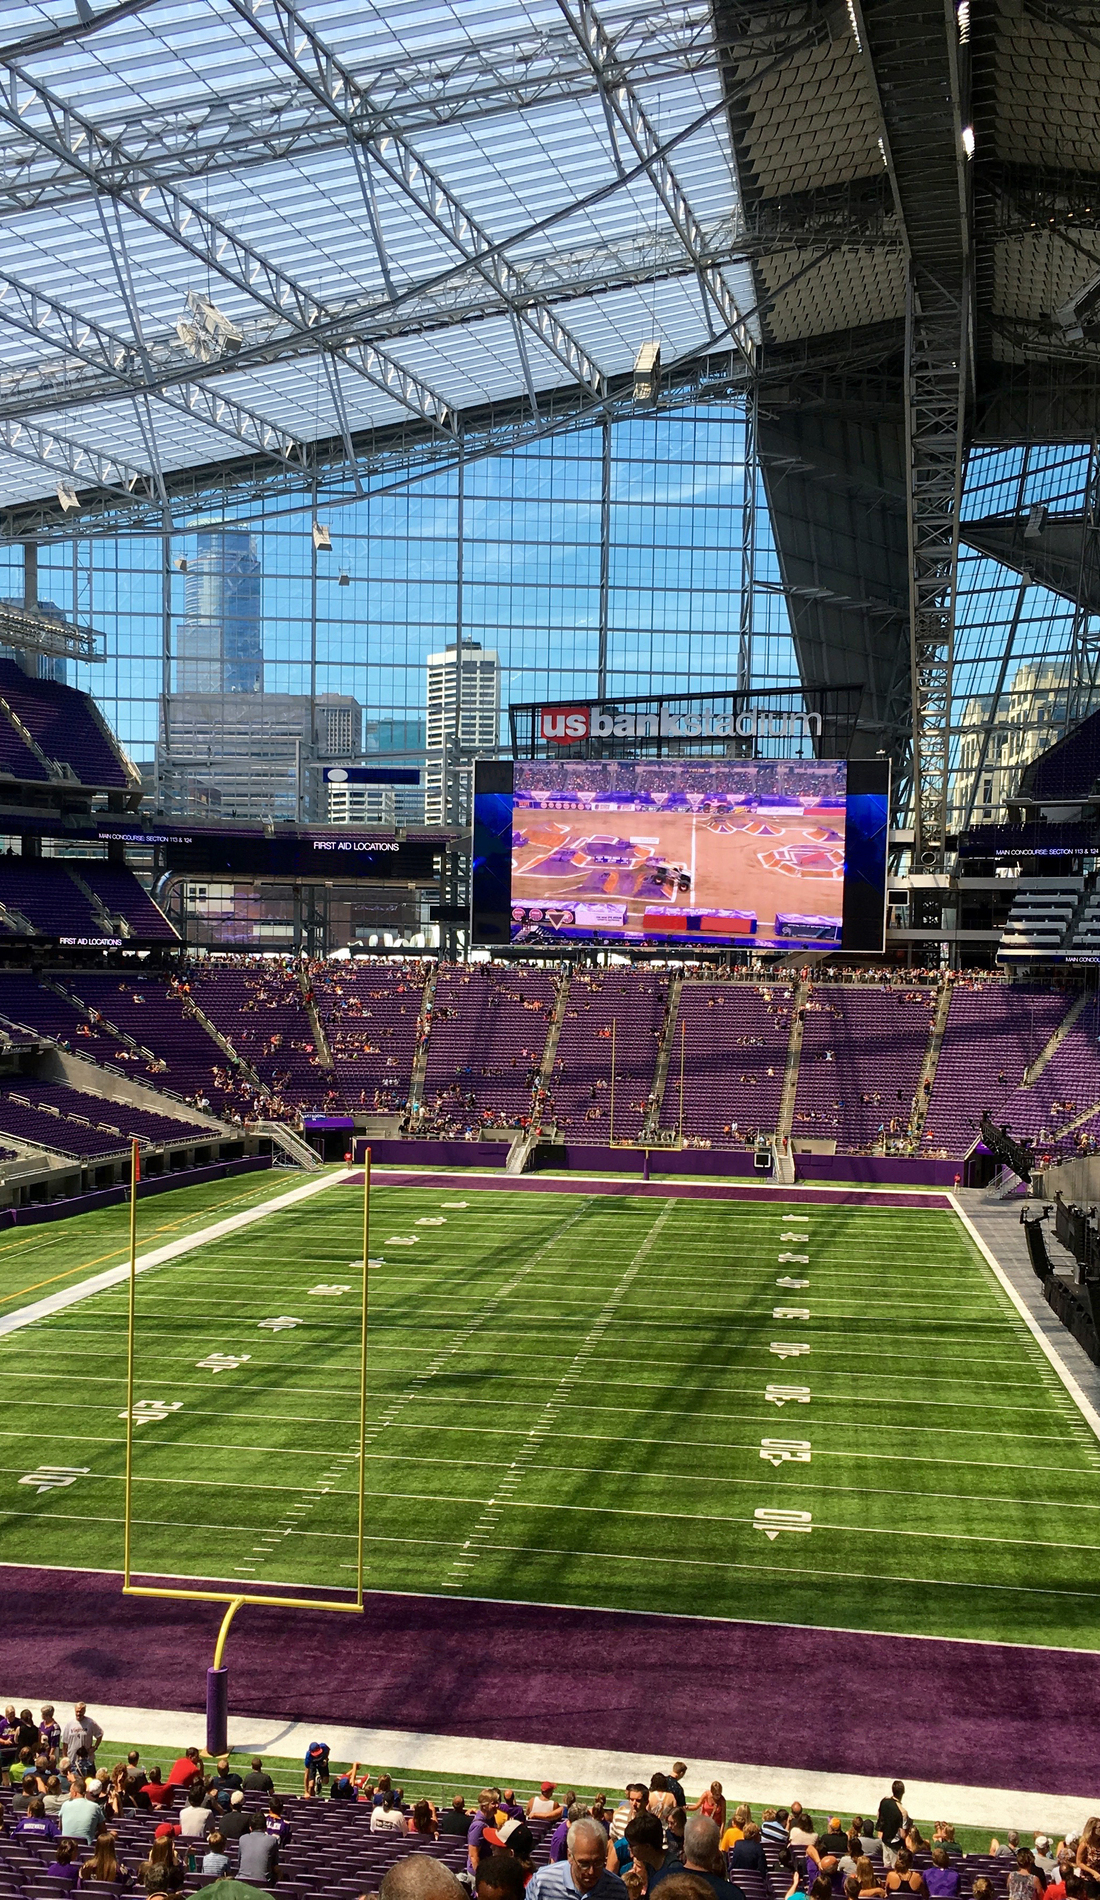 A Minnesota Vikings live event